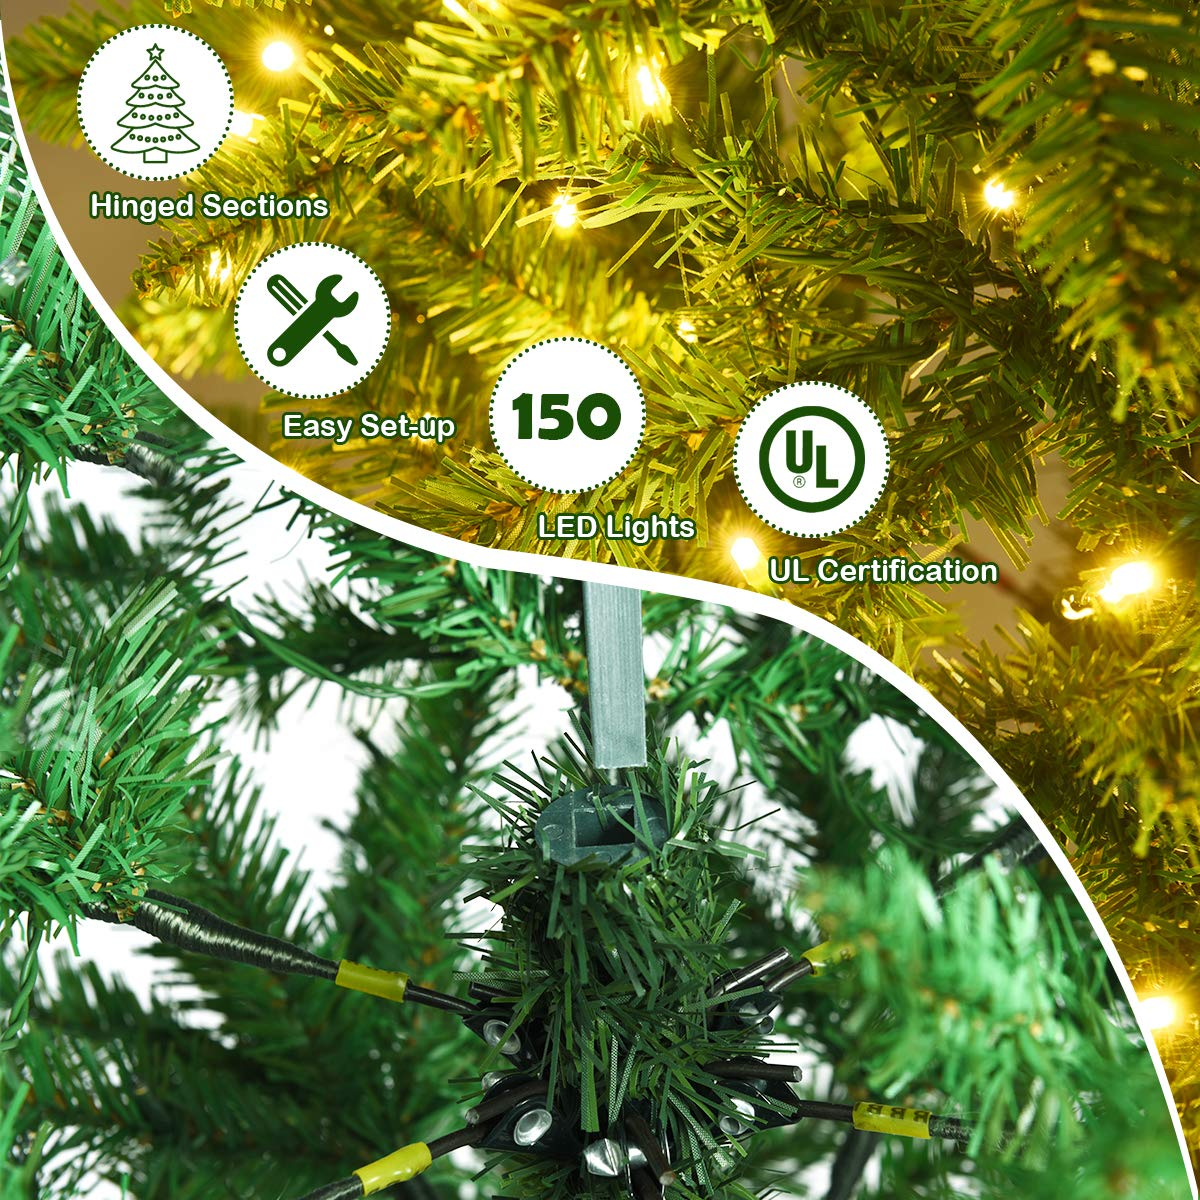 Goplus 5ft Pre-lit Artificial Christmas Tree, Hinged Fir Pencil Christmas Tree with Lights